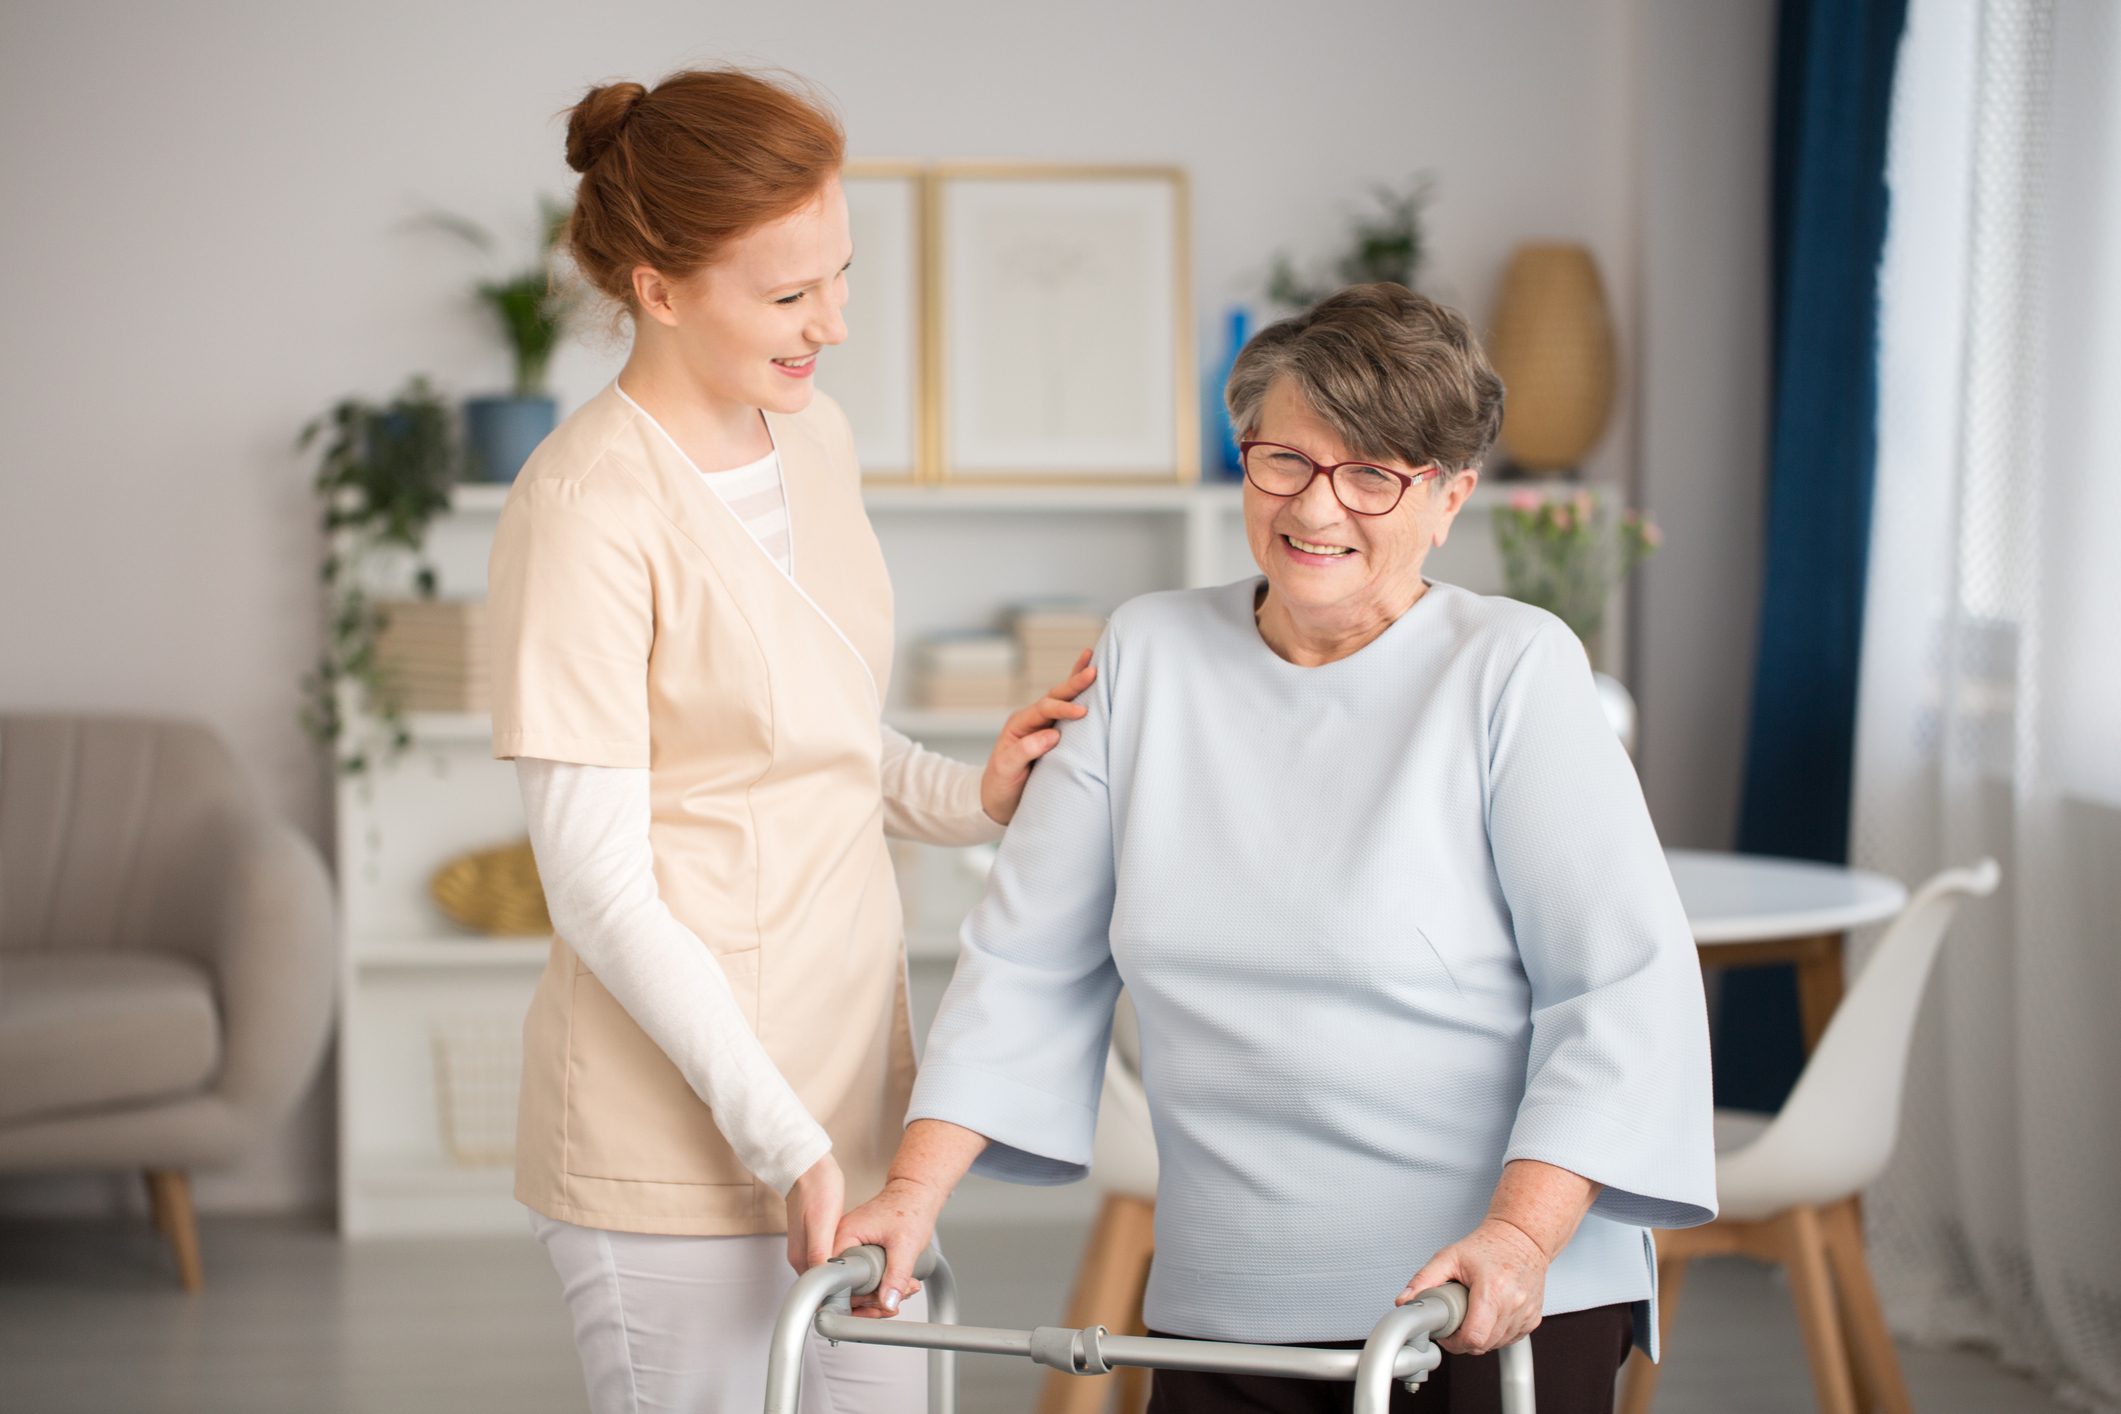 Medical caretaker helping senior woman